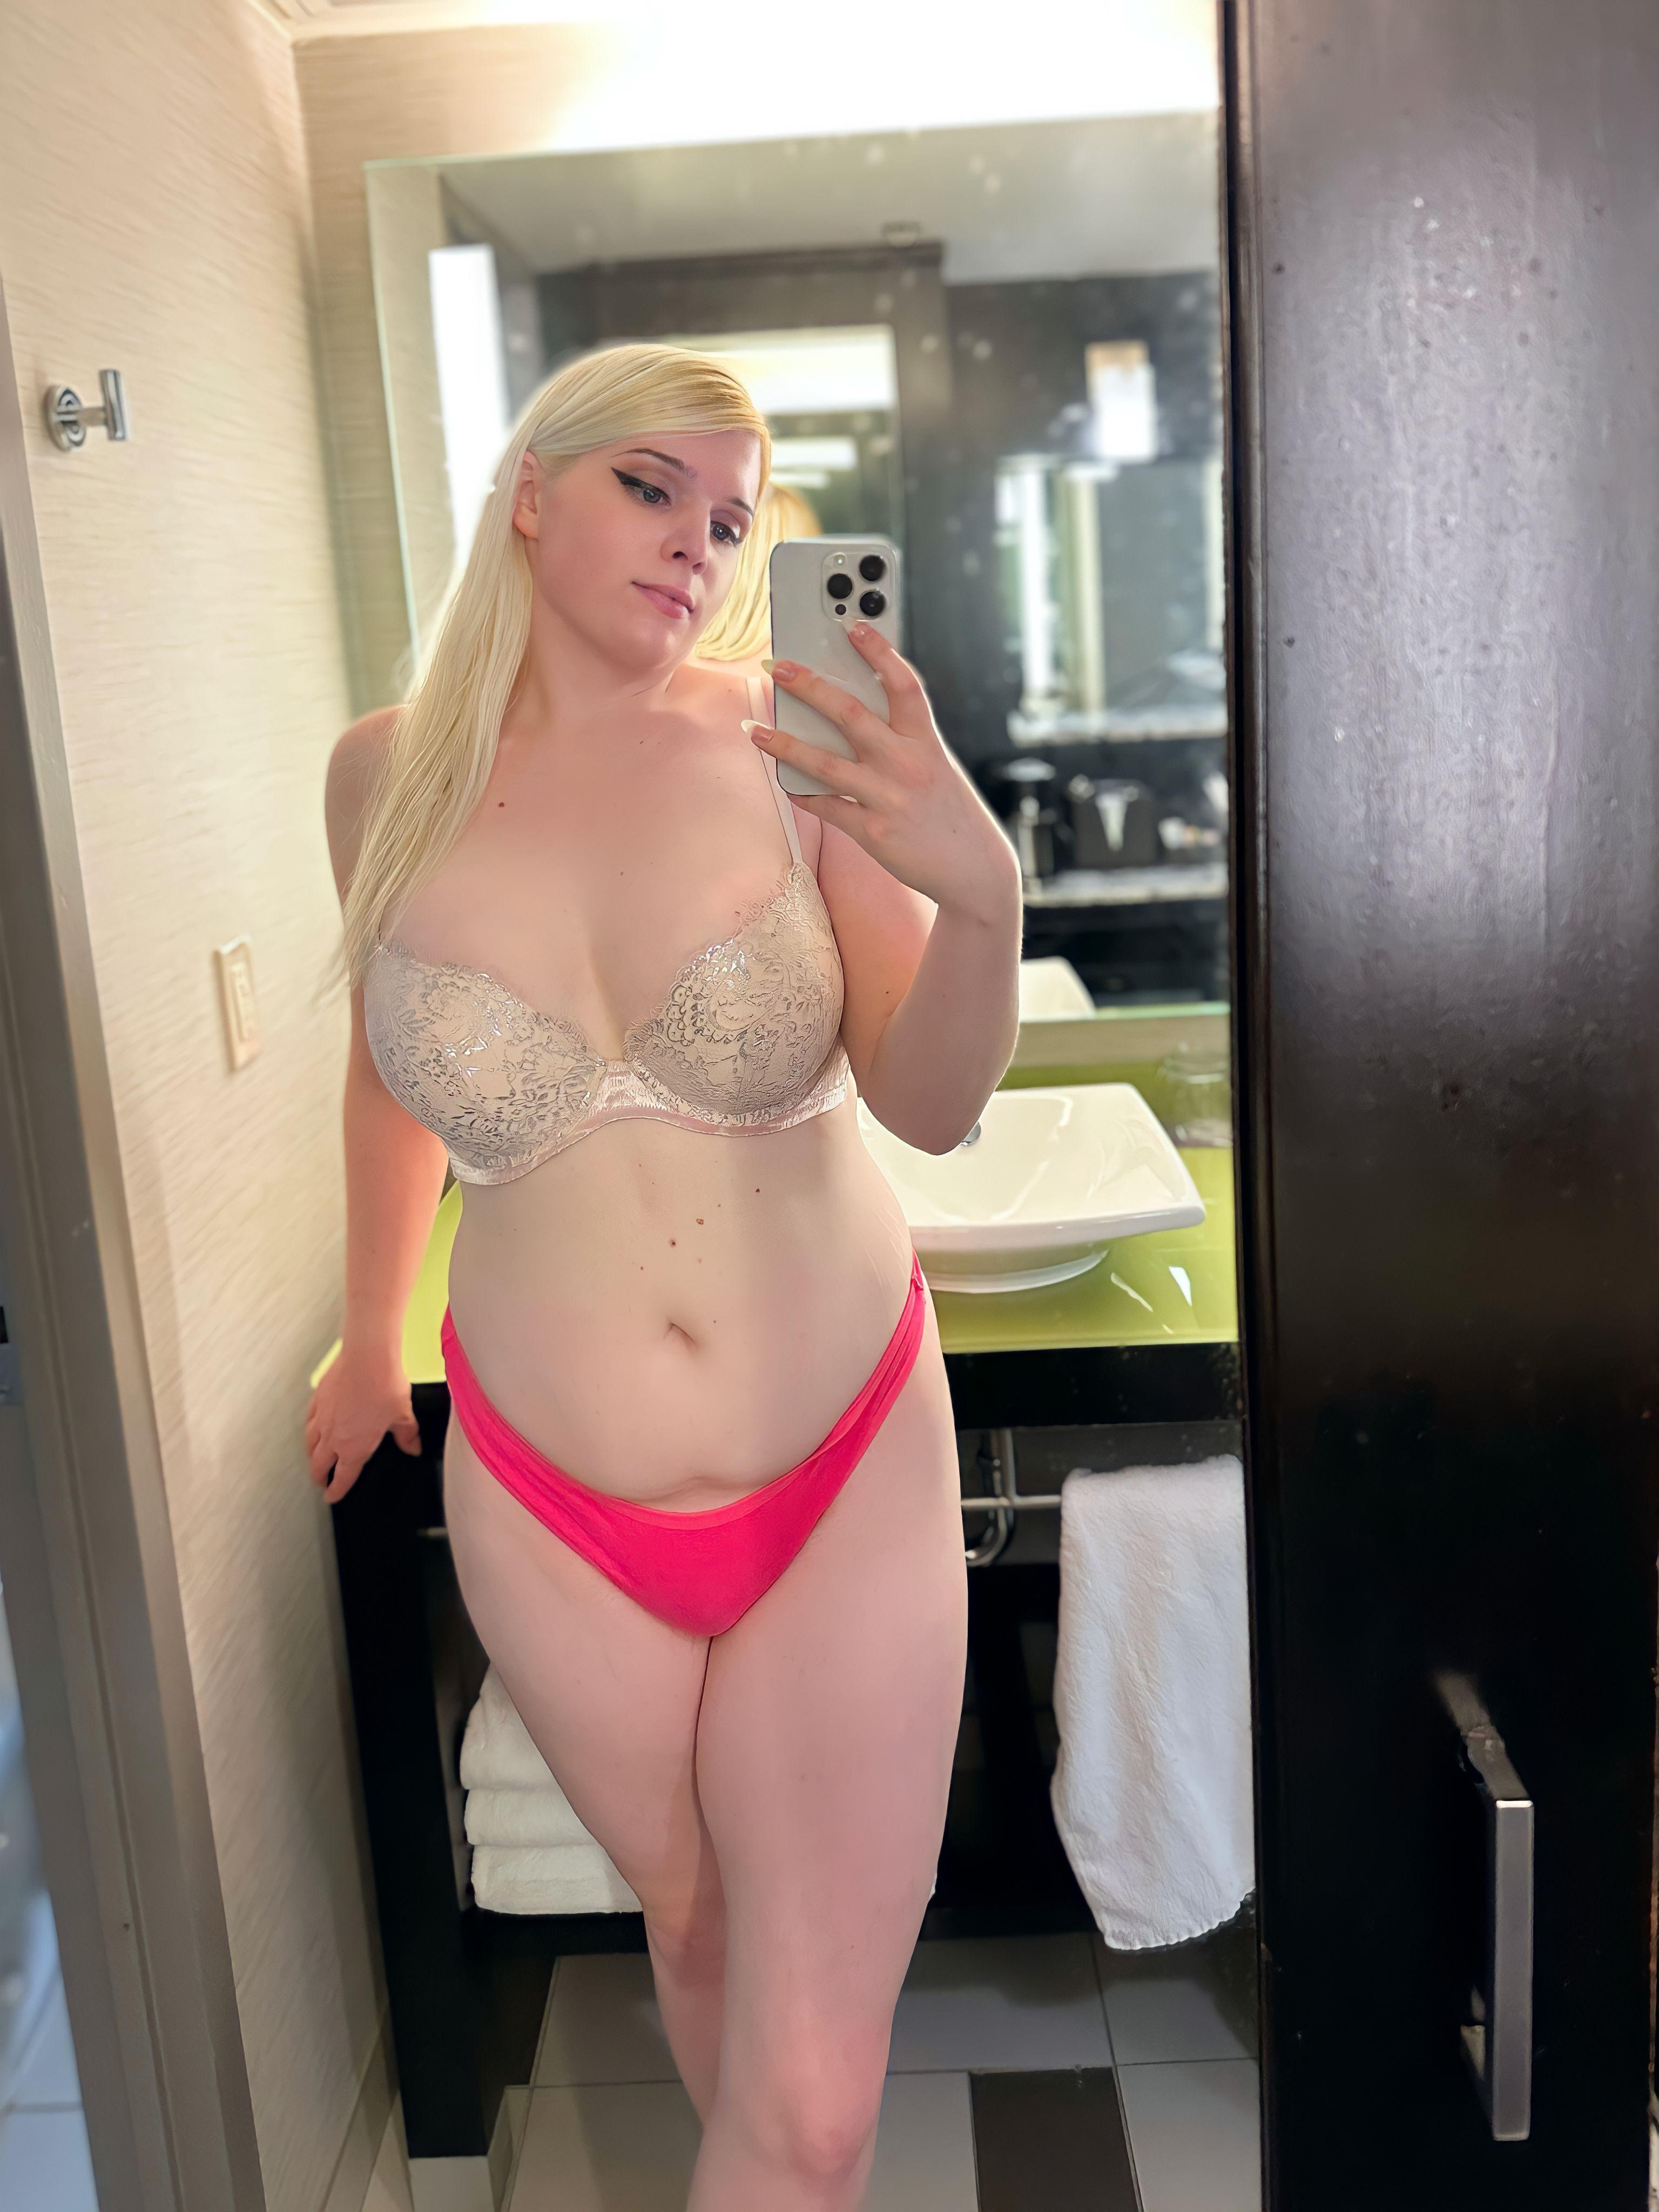 A chubby girl pic for you 💕 10diziz - transexual woman